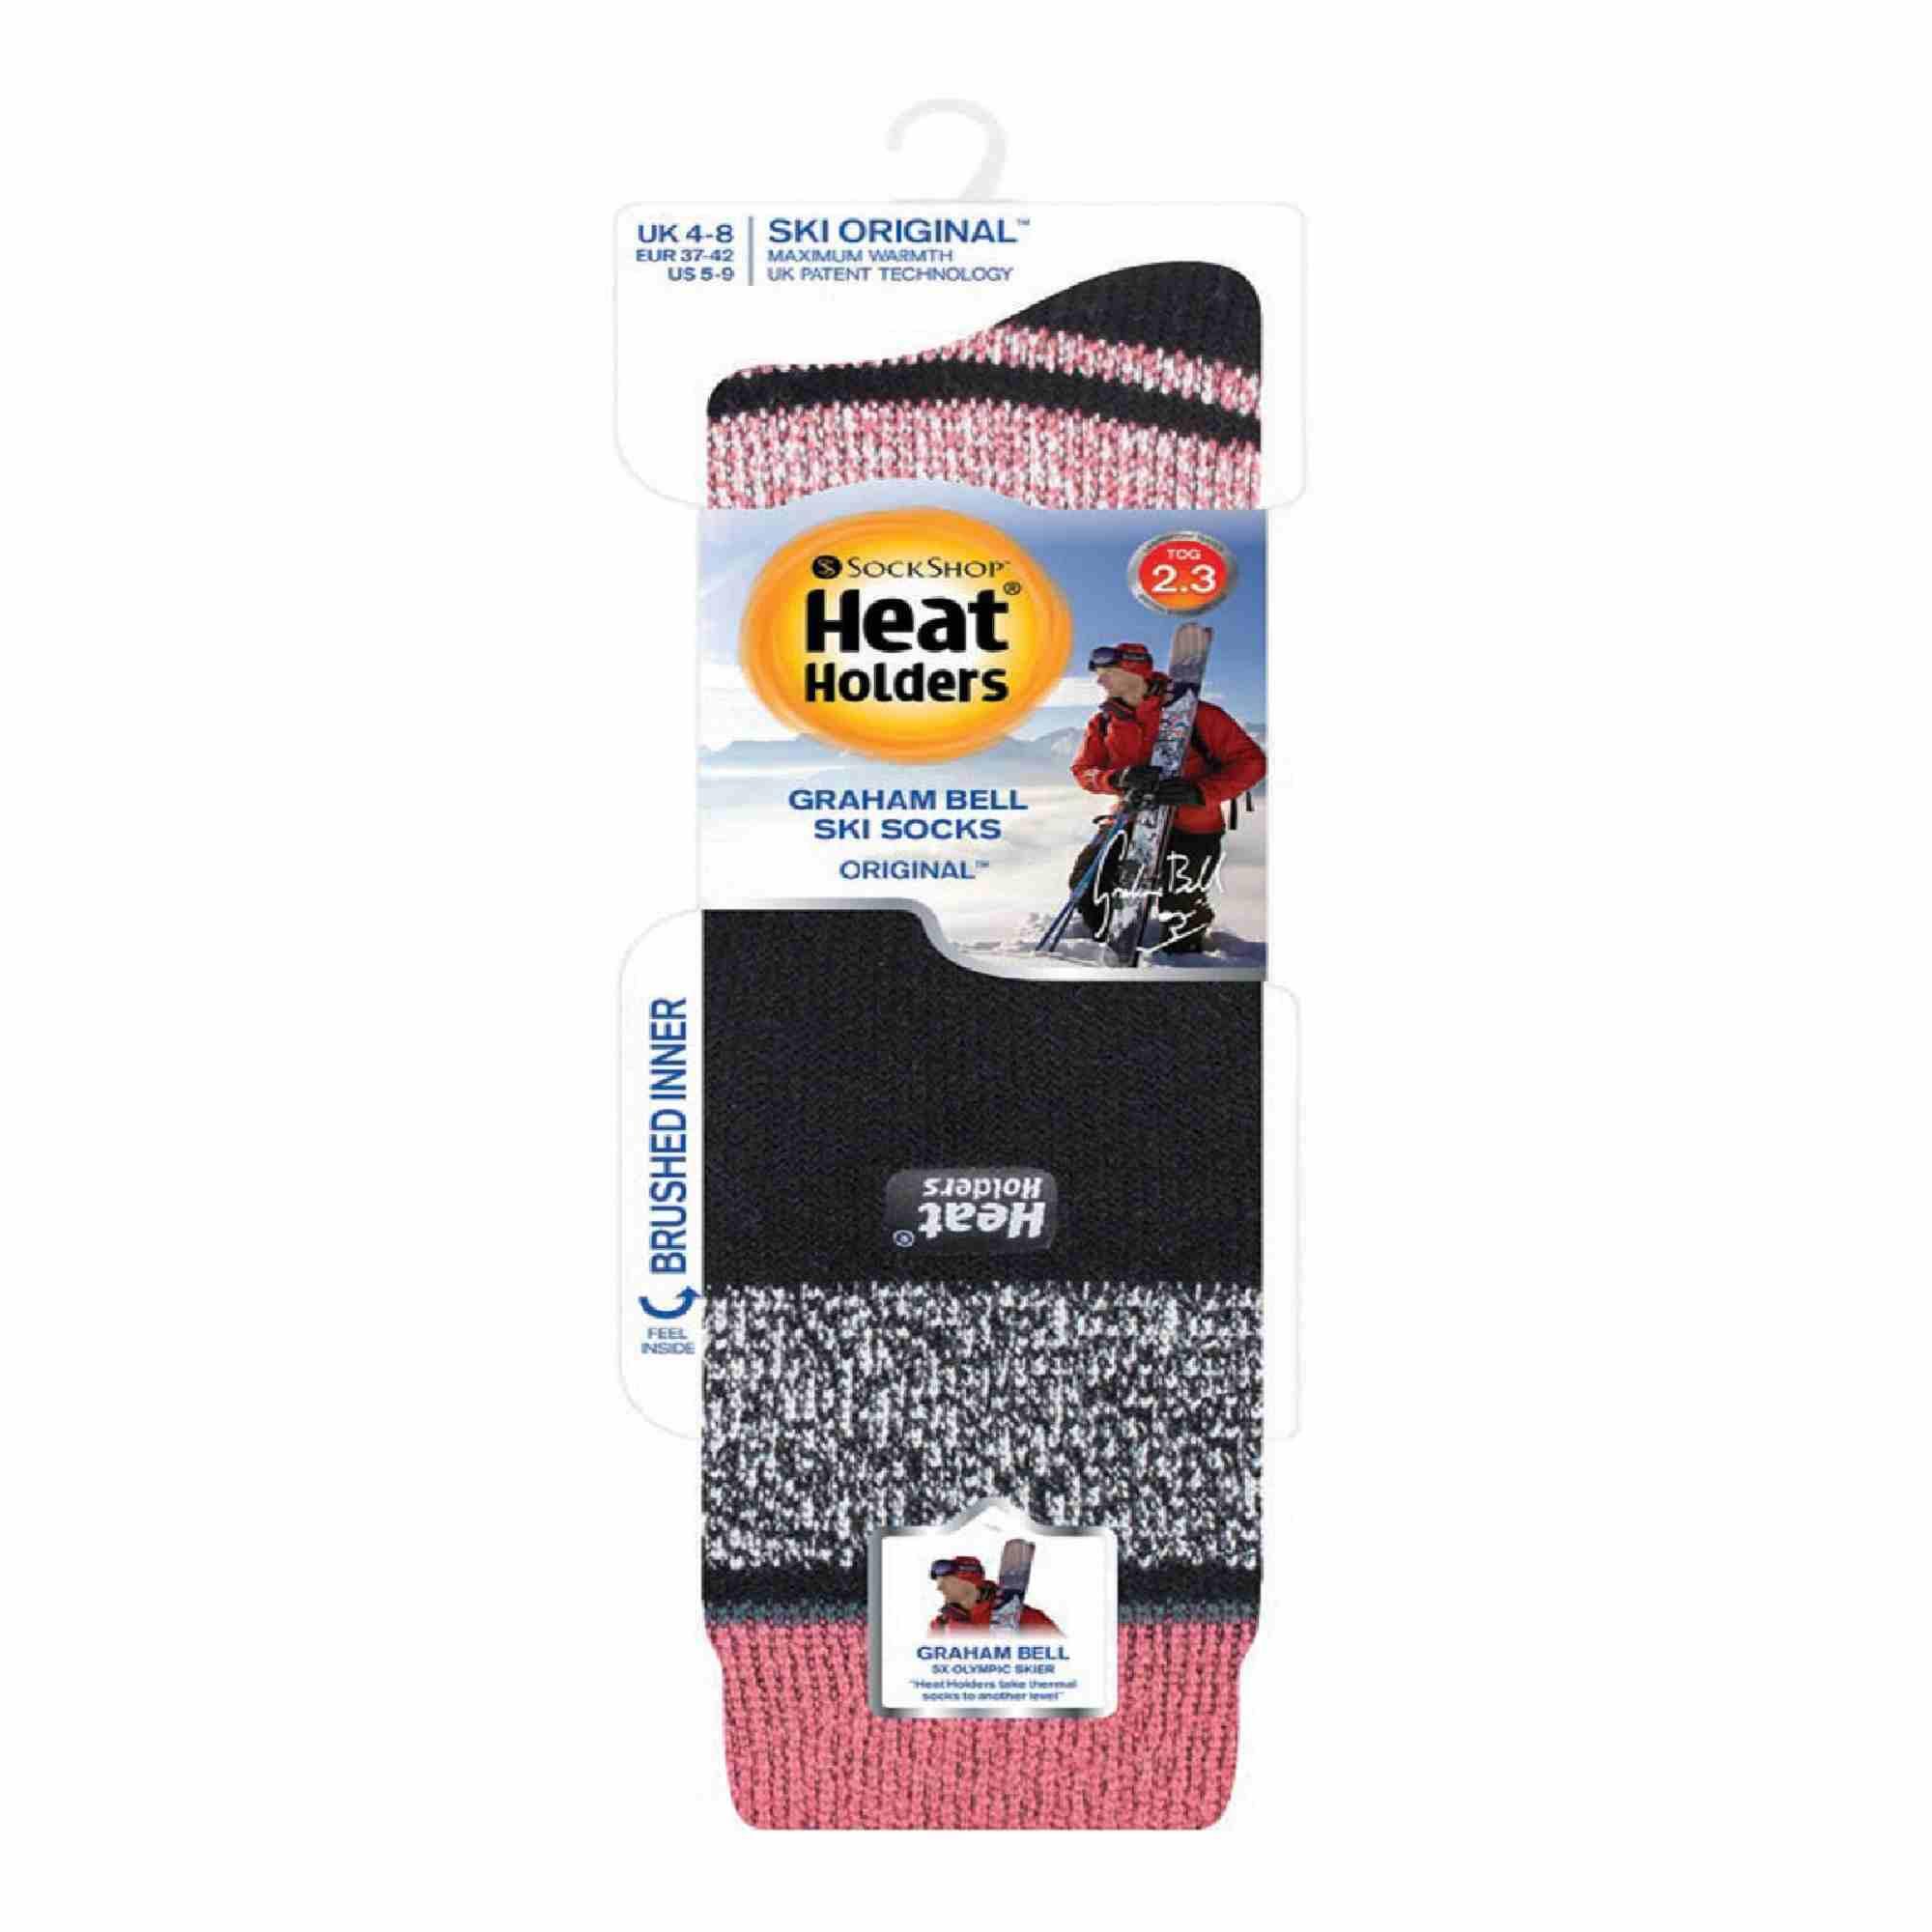 Ladies Thermal Extra Long 2.3 TOG Winter Knee High Ski Socks 2/7